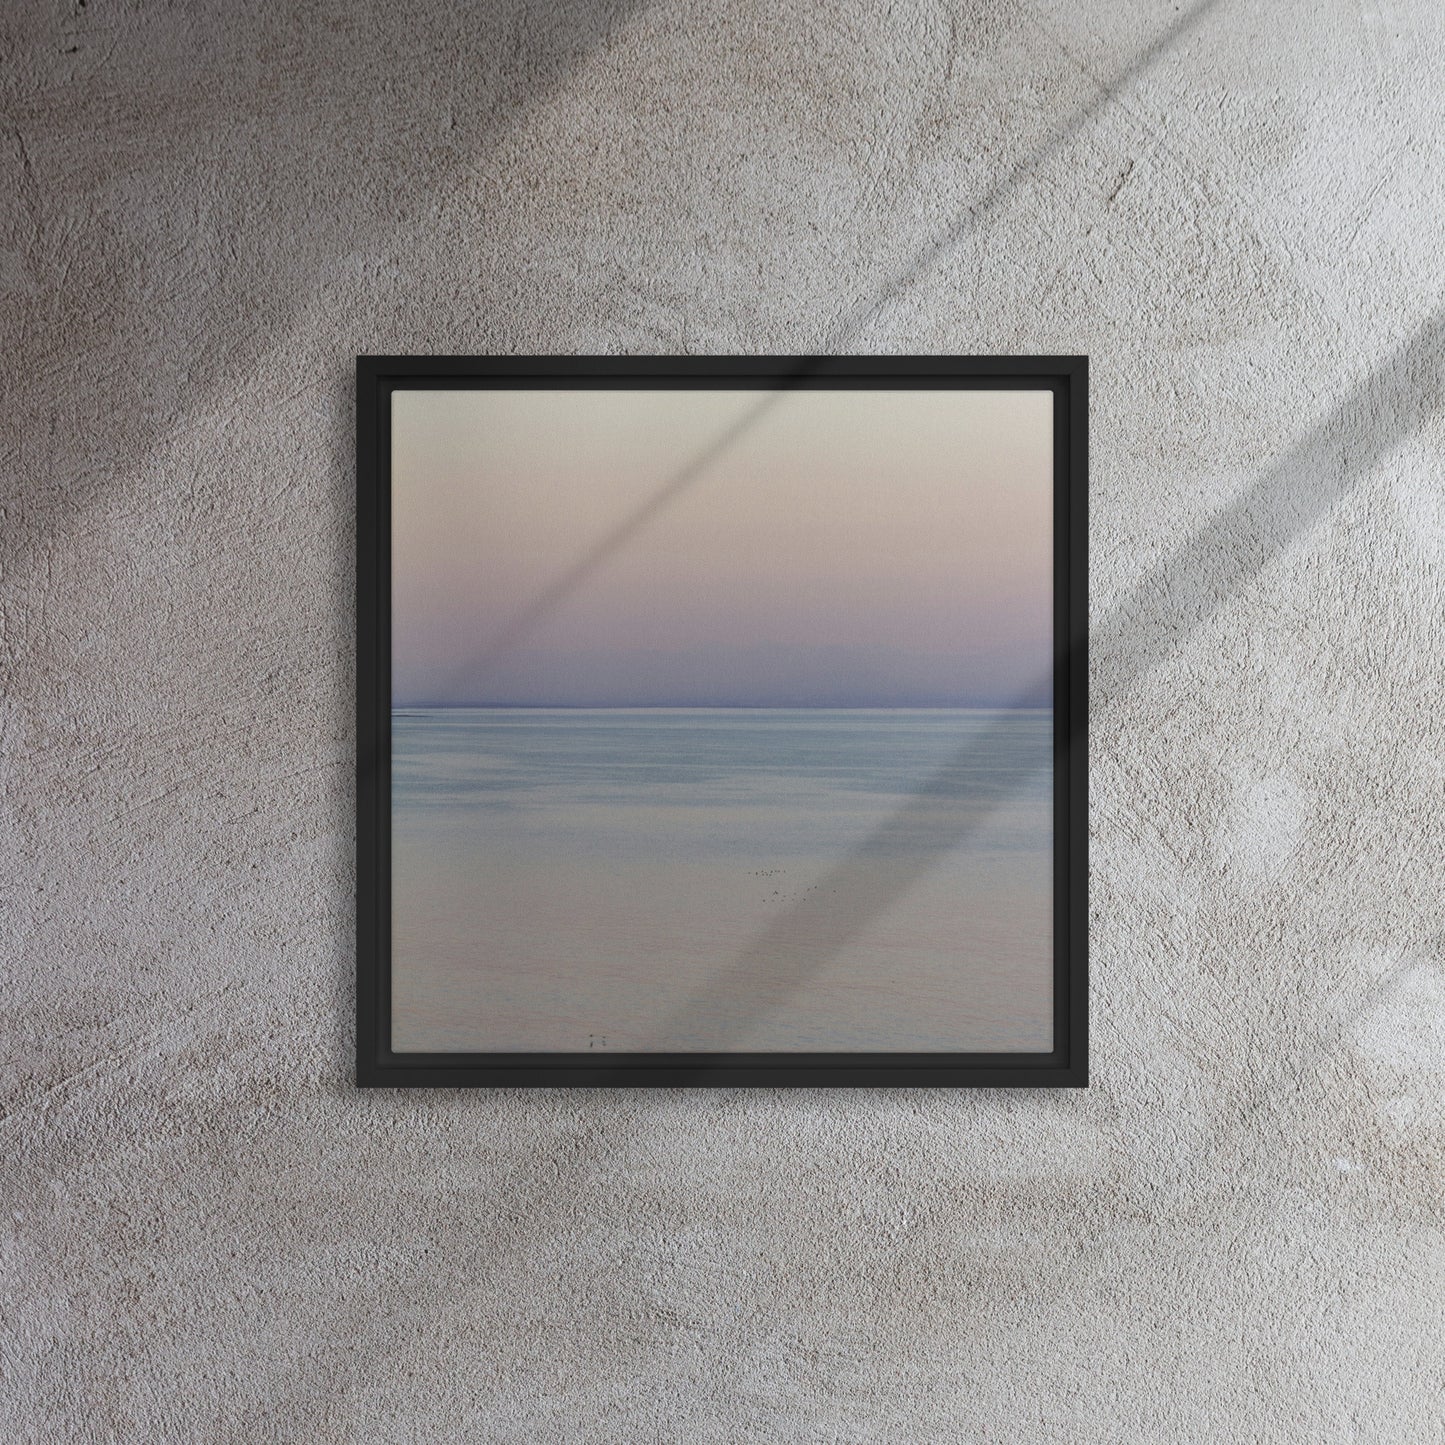 Mireille Fine Art, beach scene artwork canvas prints on floater frame 